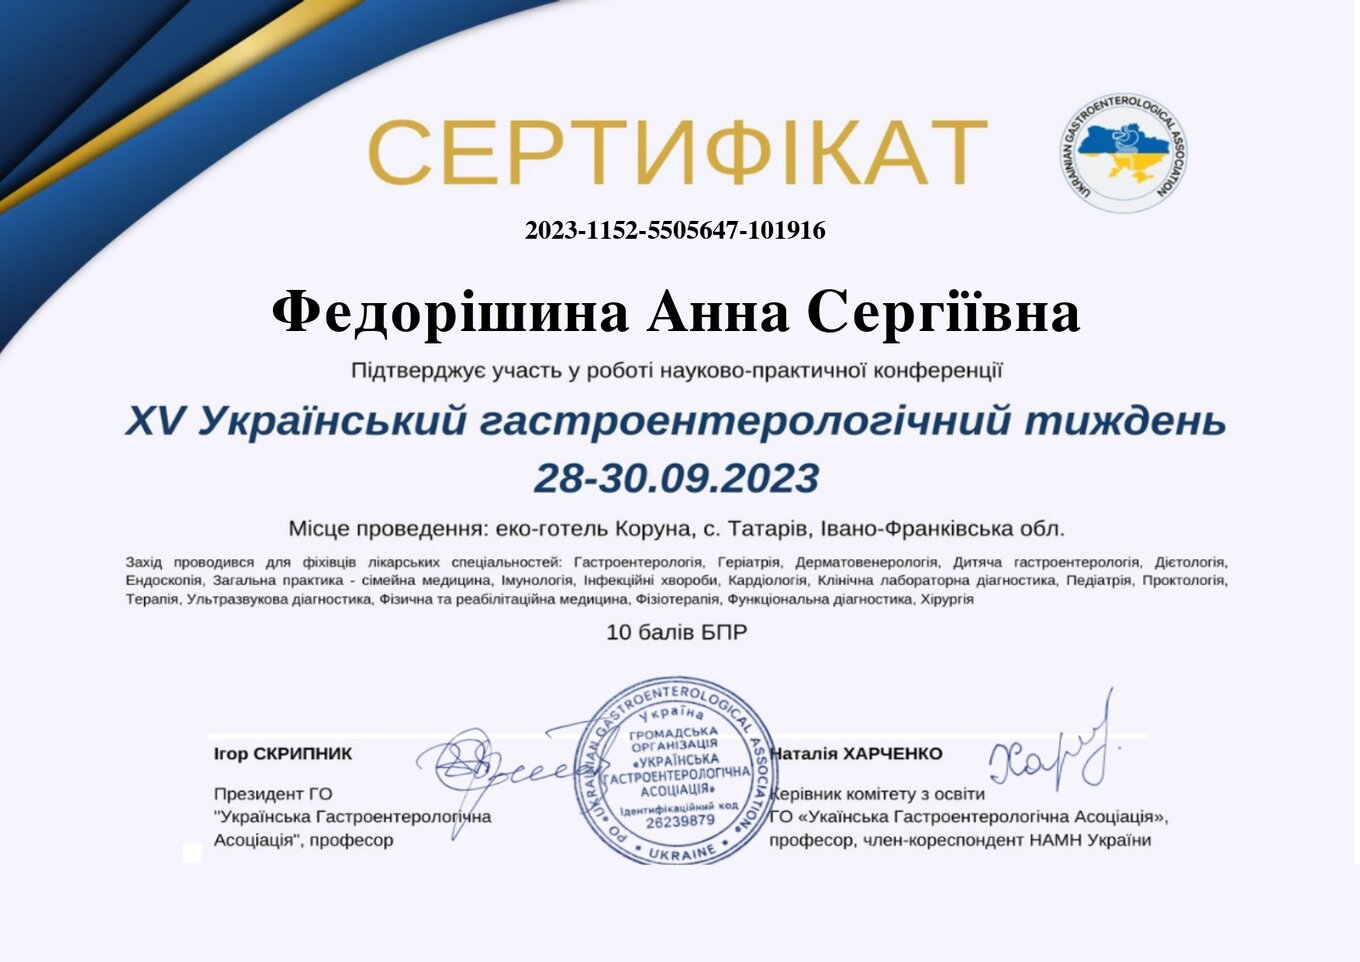 Fedorishina Anna Sergiyivna sertifikat1